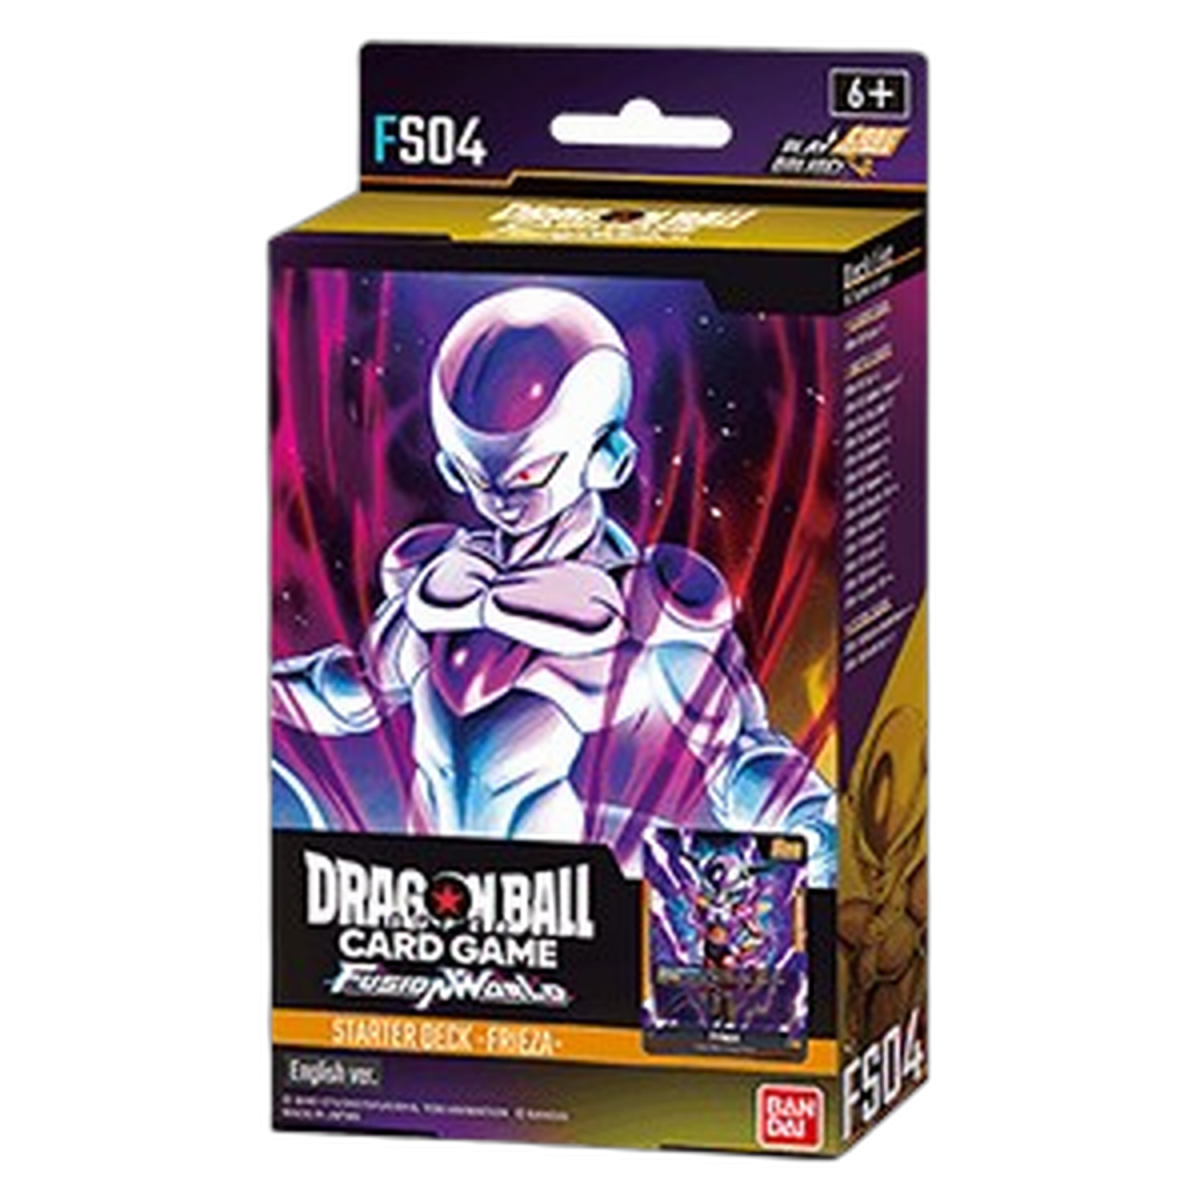 Dragon Ball CG Fusion World - Starter Deck - FS04 - EN